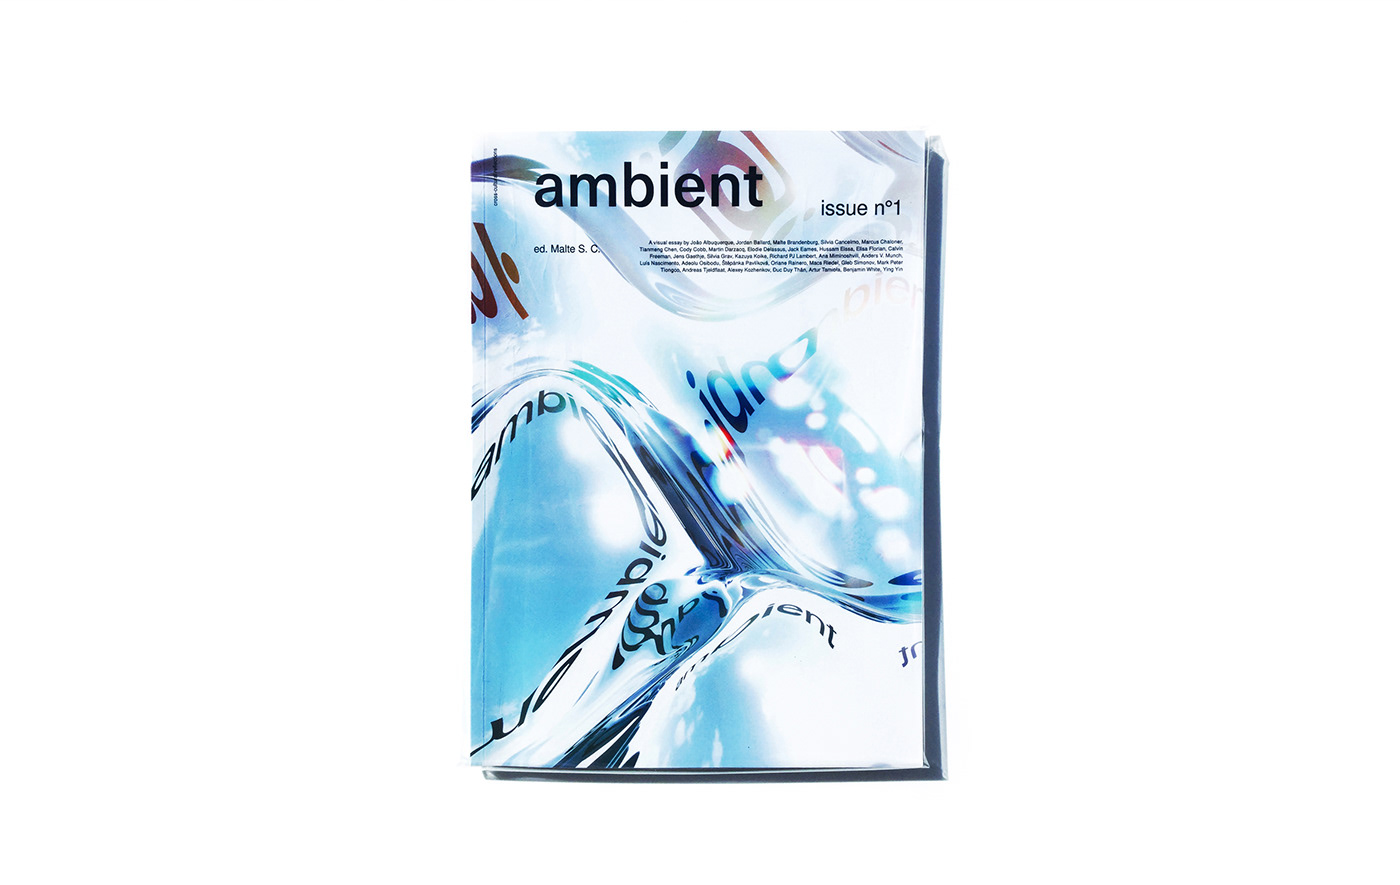 atmosphere Collaboration investigation magazine vibe emotion SENSORY ubiquity ambience Ambient